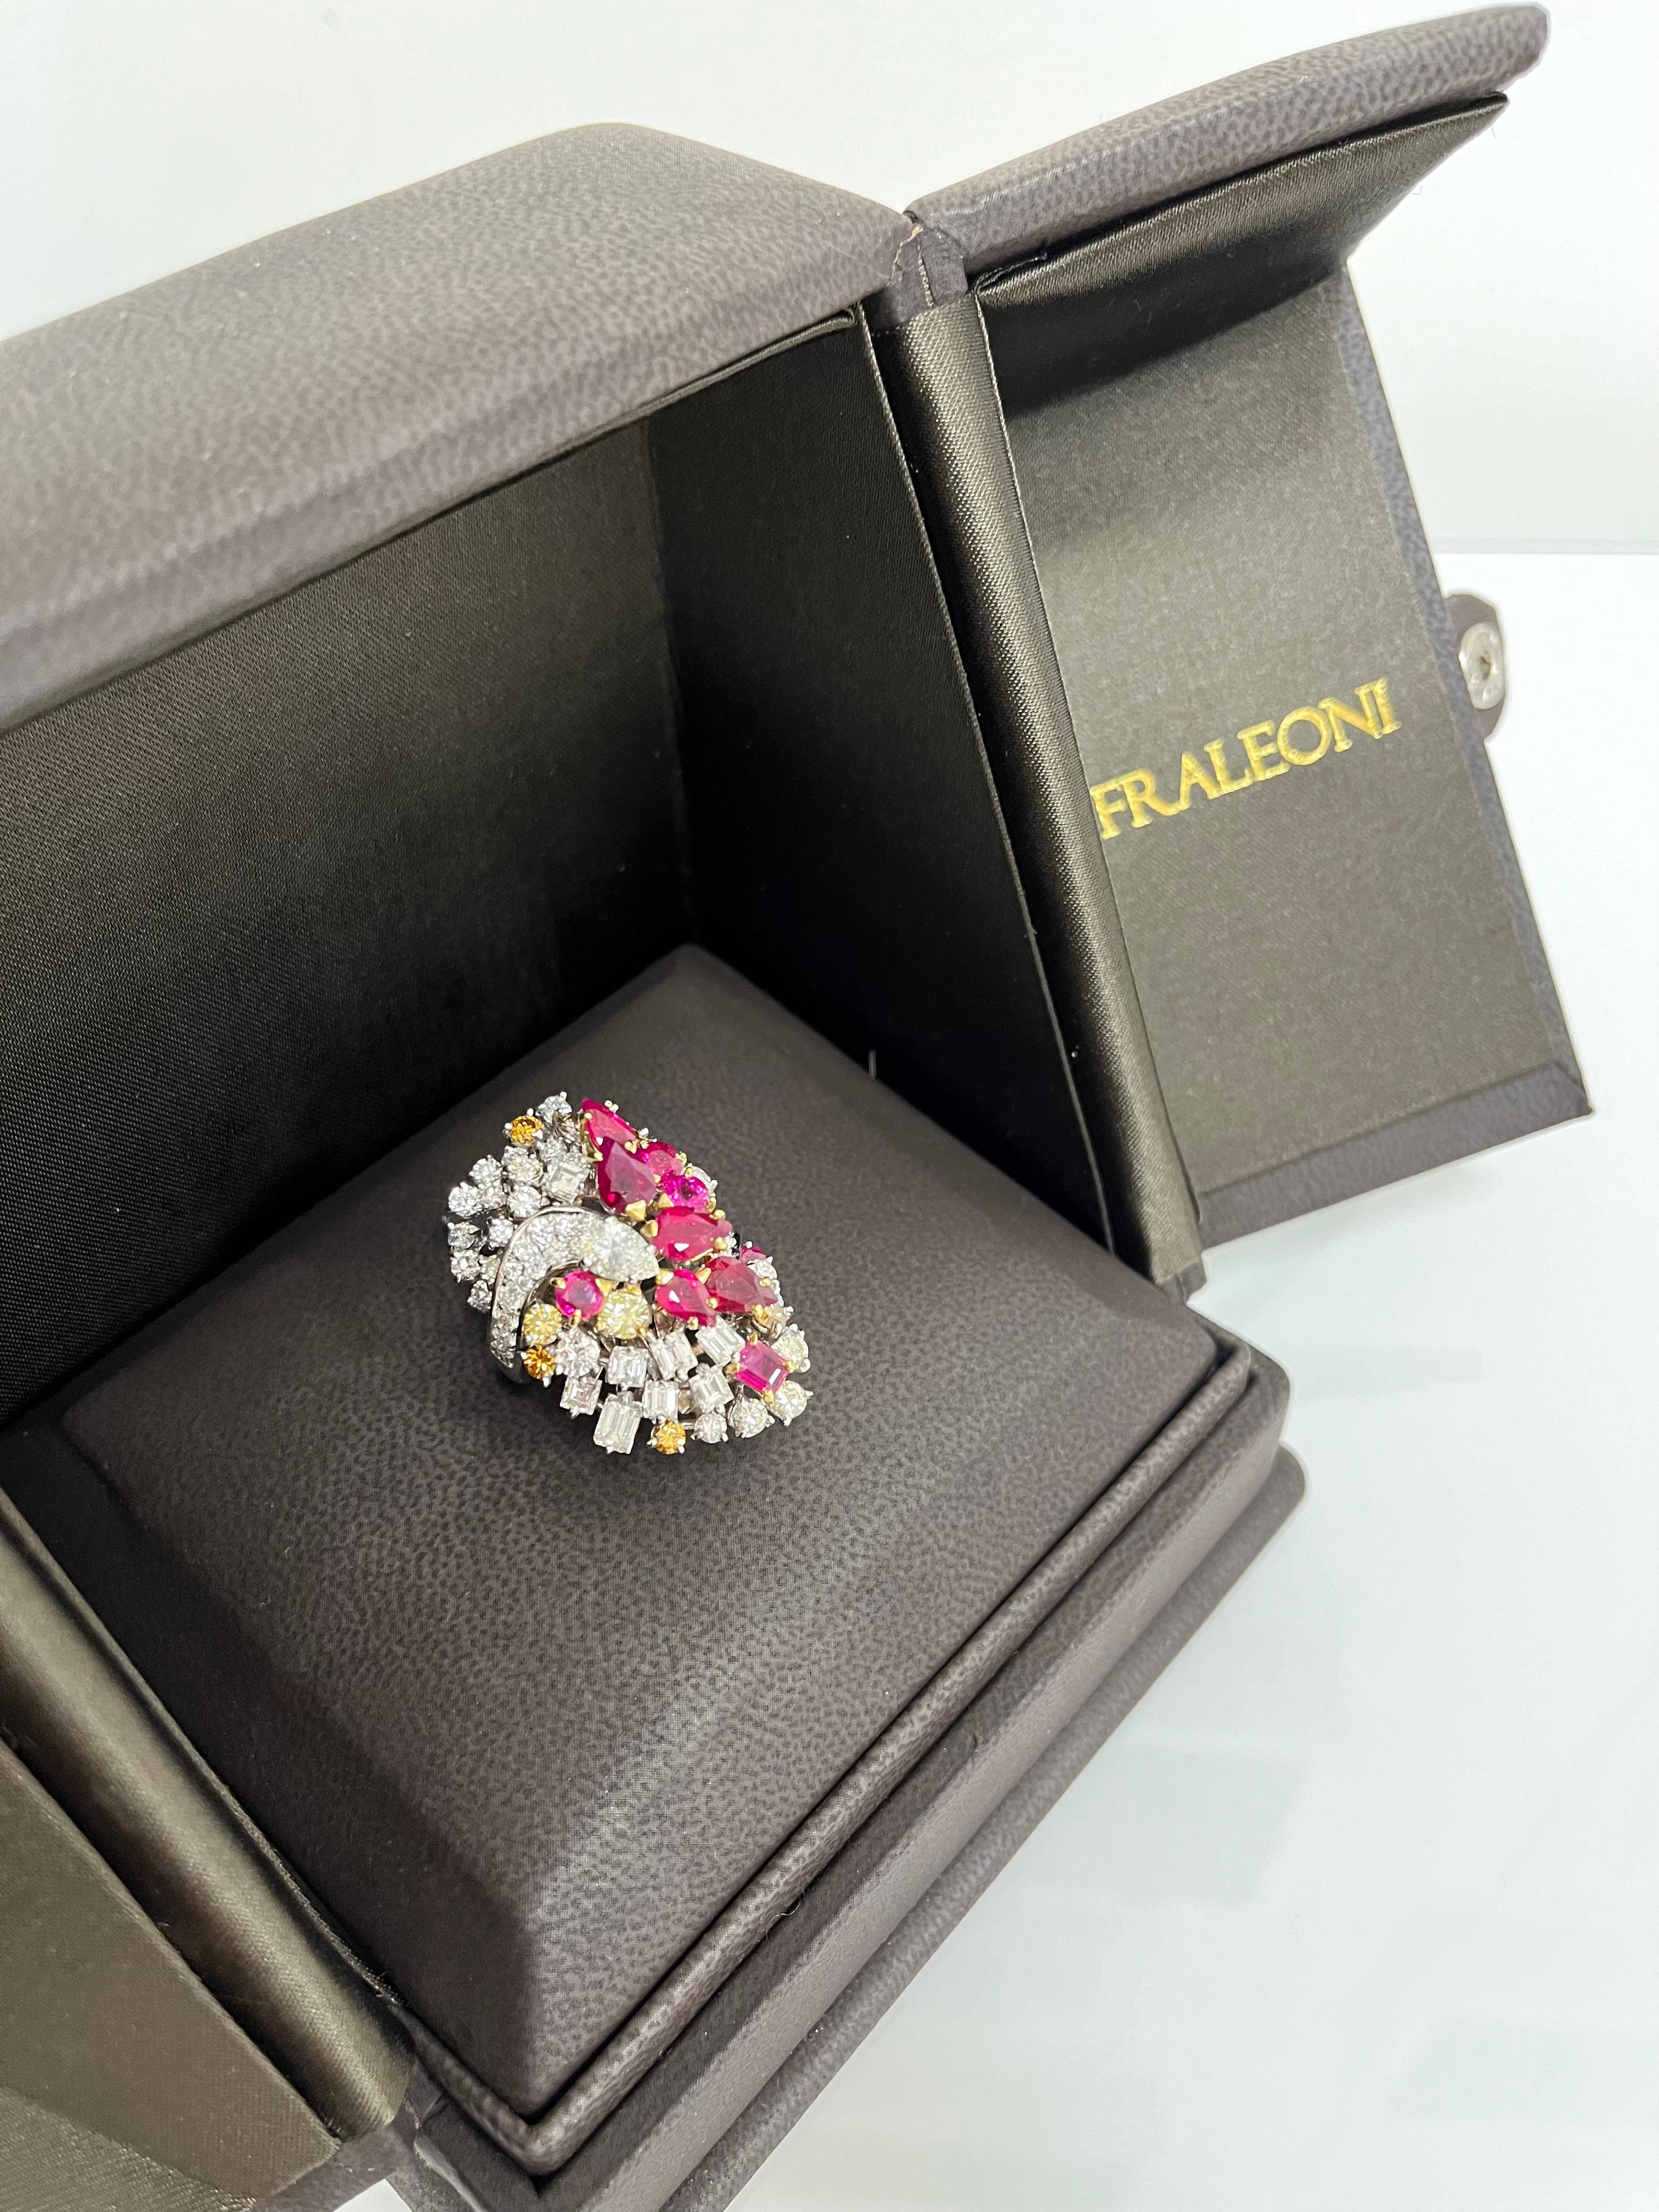 Fraleoni 18 Kt. White Gold Diamonds Rubies Cocktail Ring For Sale 5